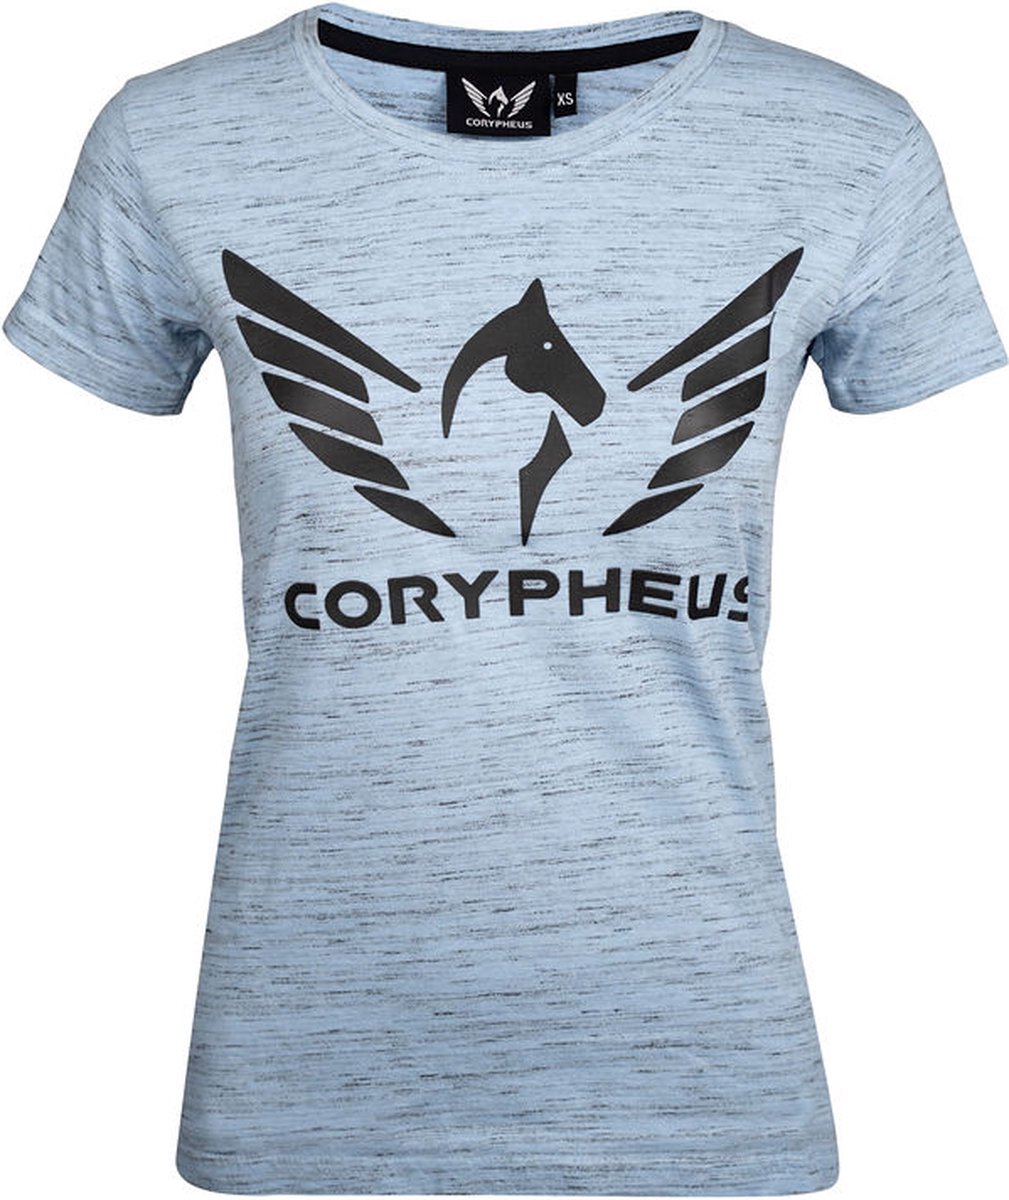 Corypheus Skyway Women's T-Shirt - Medium